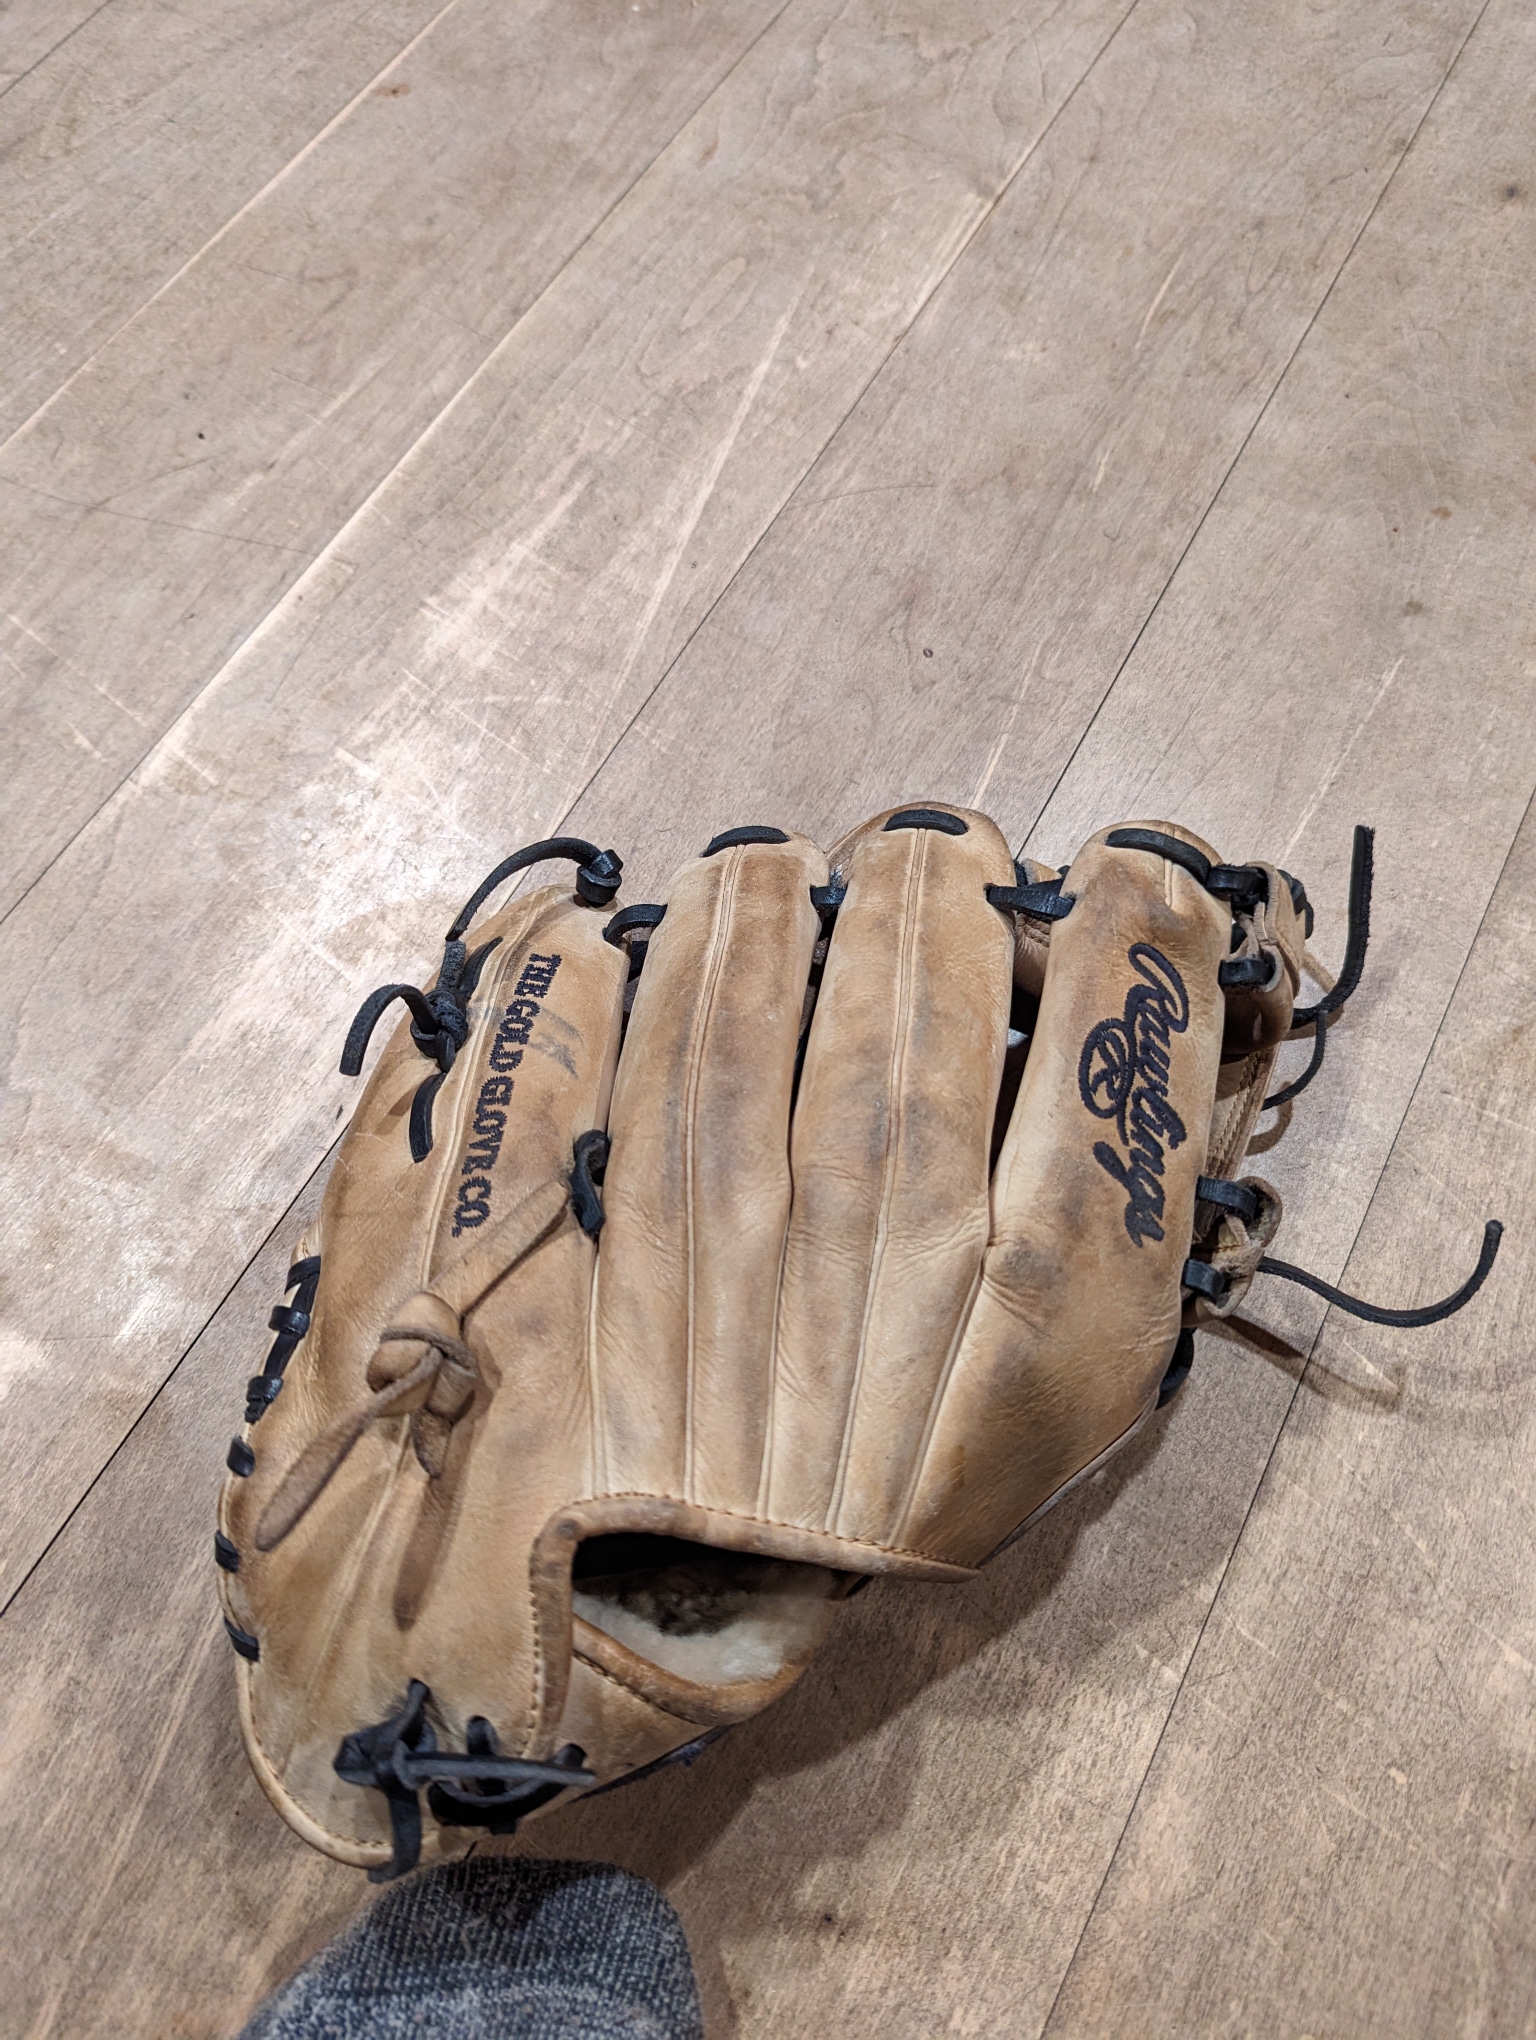 Used Rawlings Pro Preferred Baseball Glove 11.75"